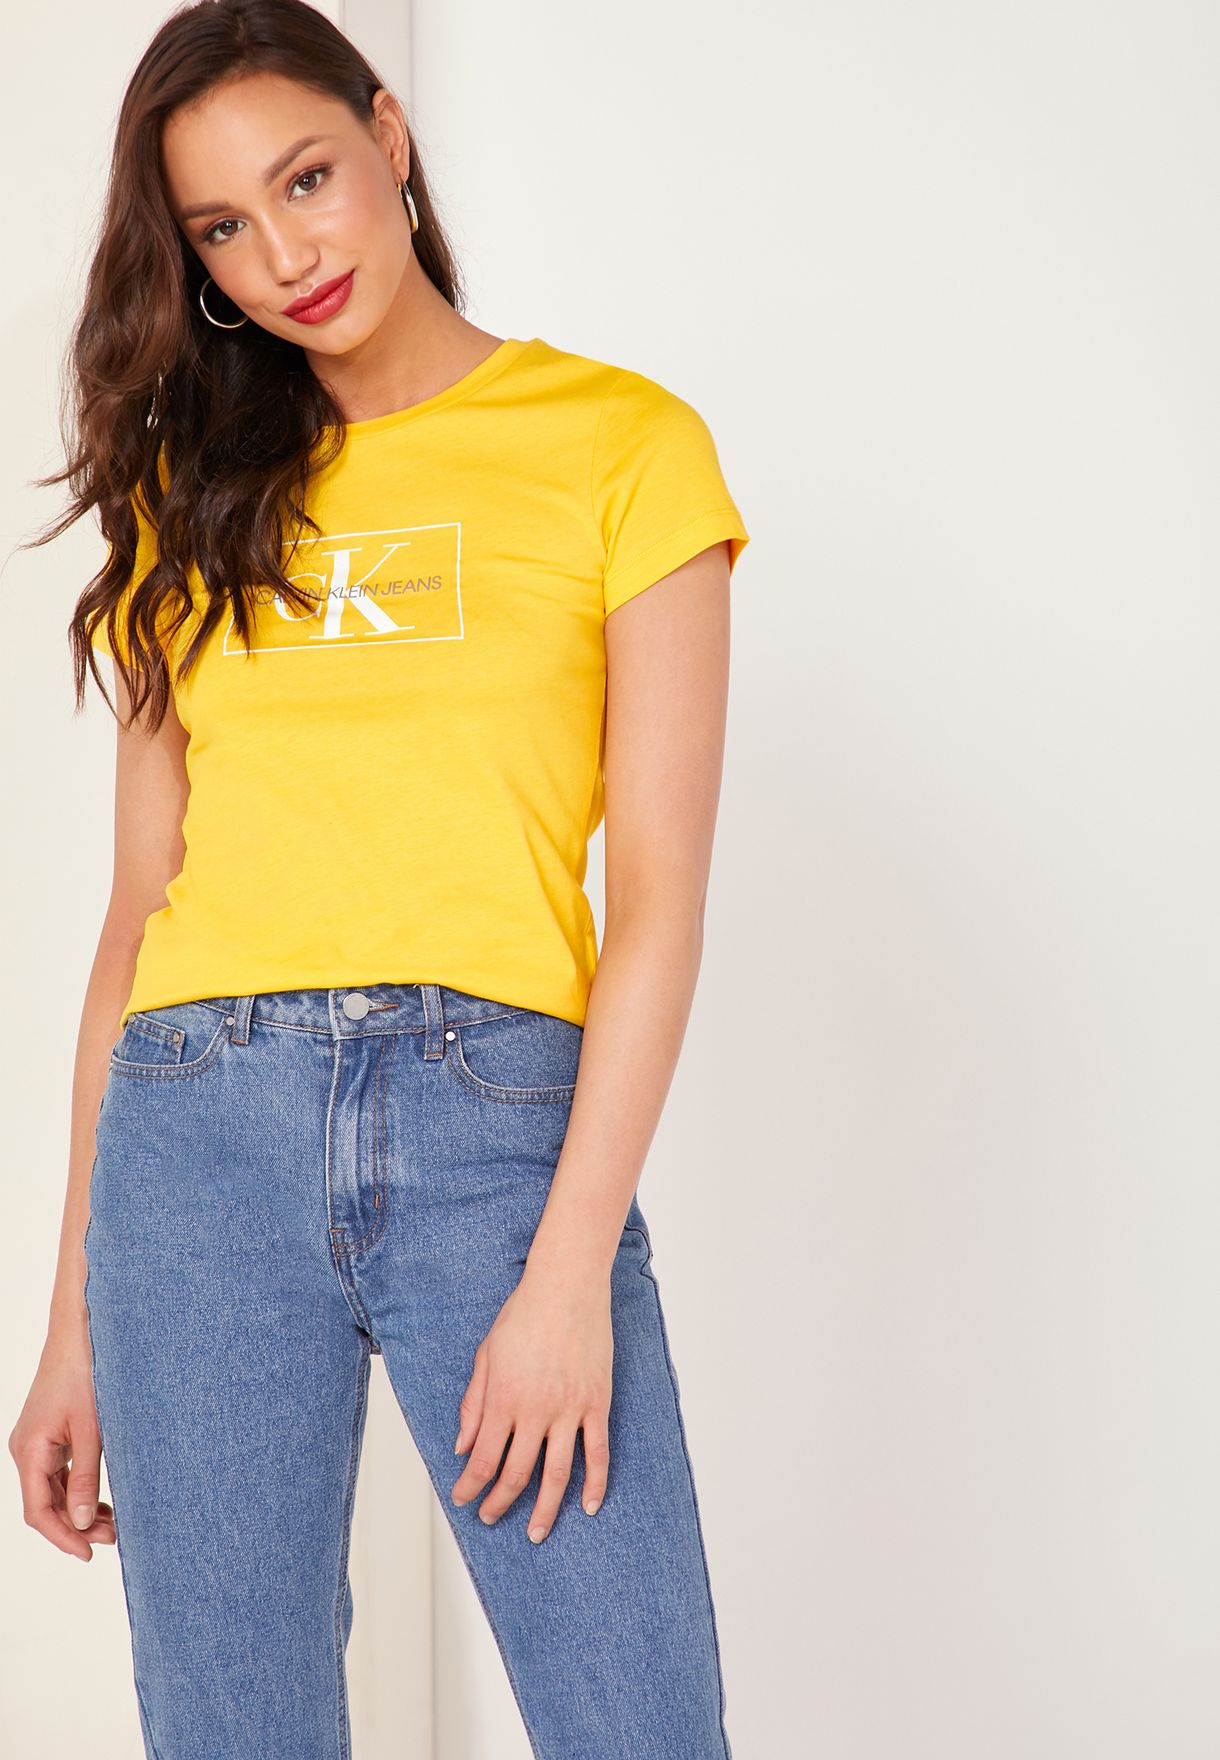 calvin klein jeans yellow shirt